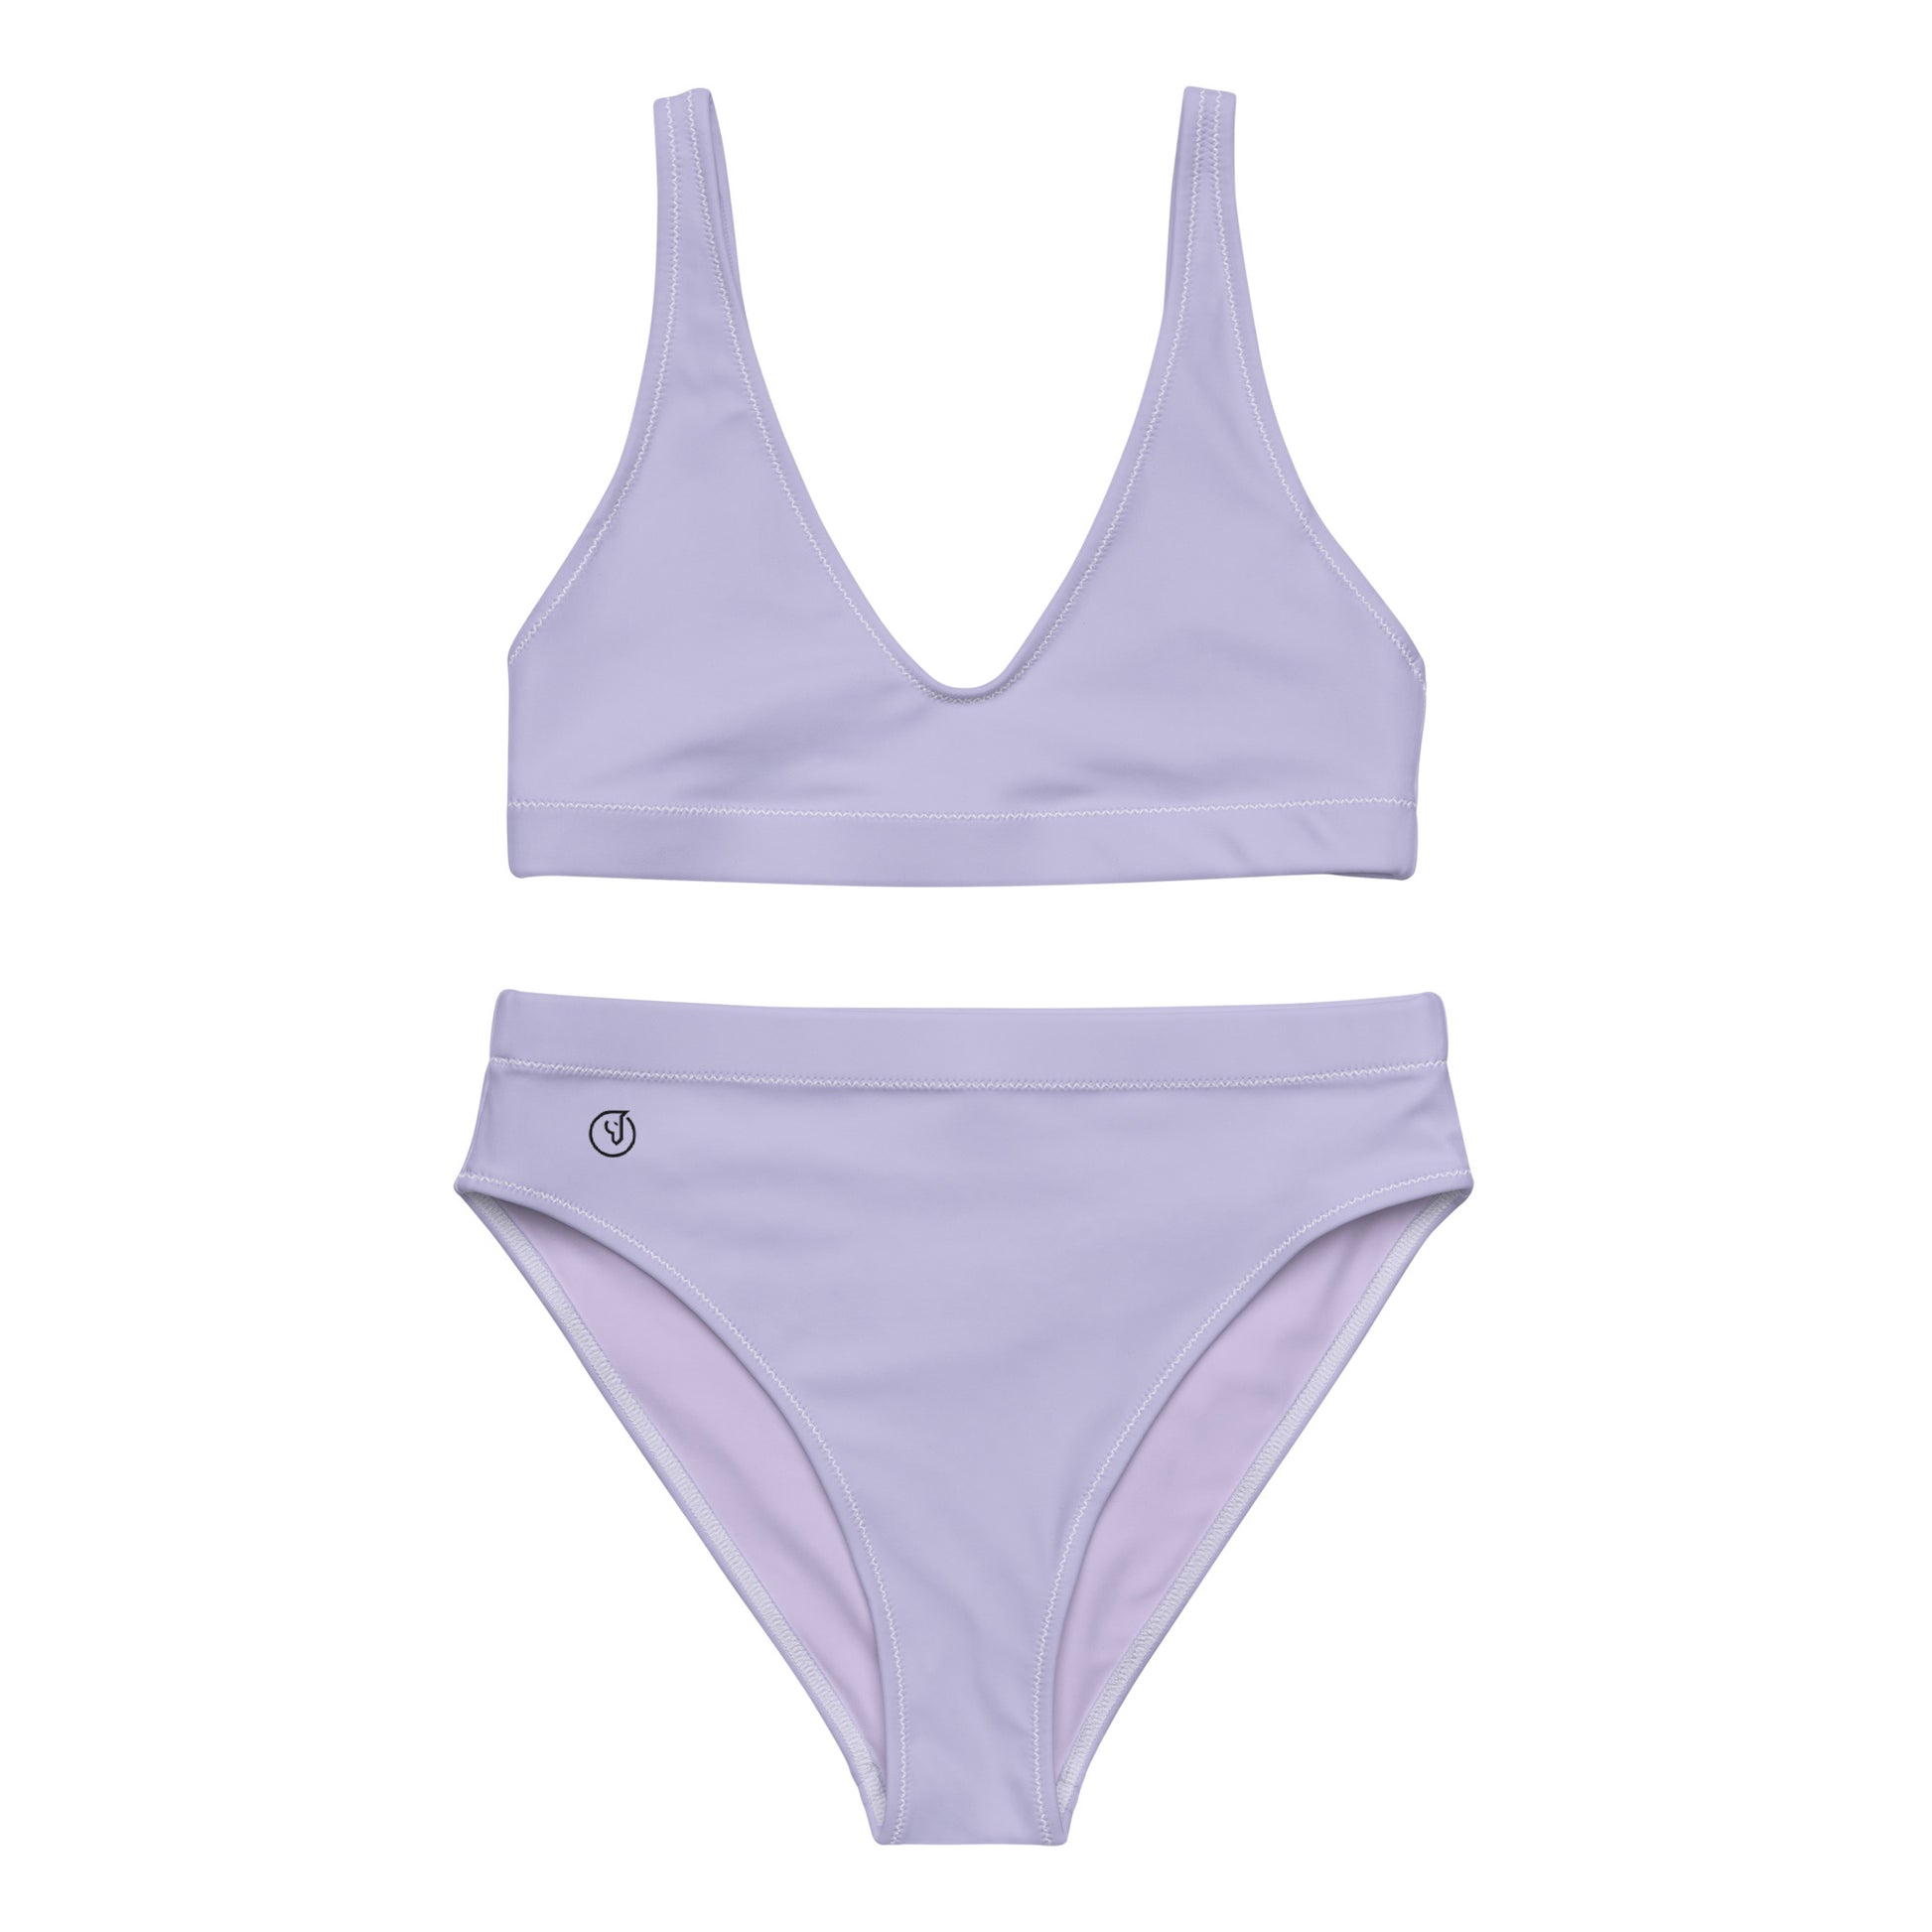 Humble Sportswear, women's Color Match lavender two-piece sport bikini